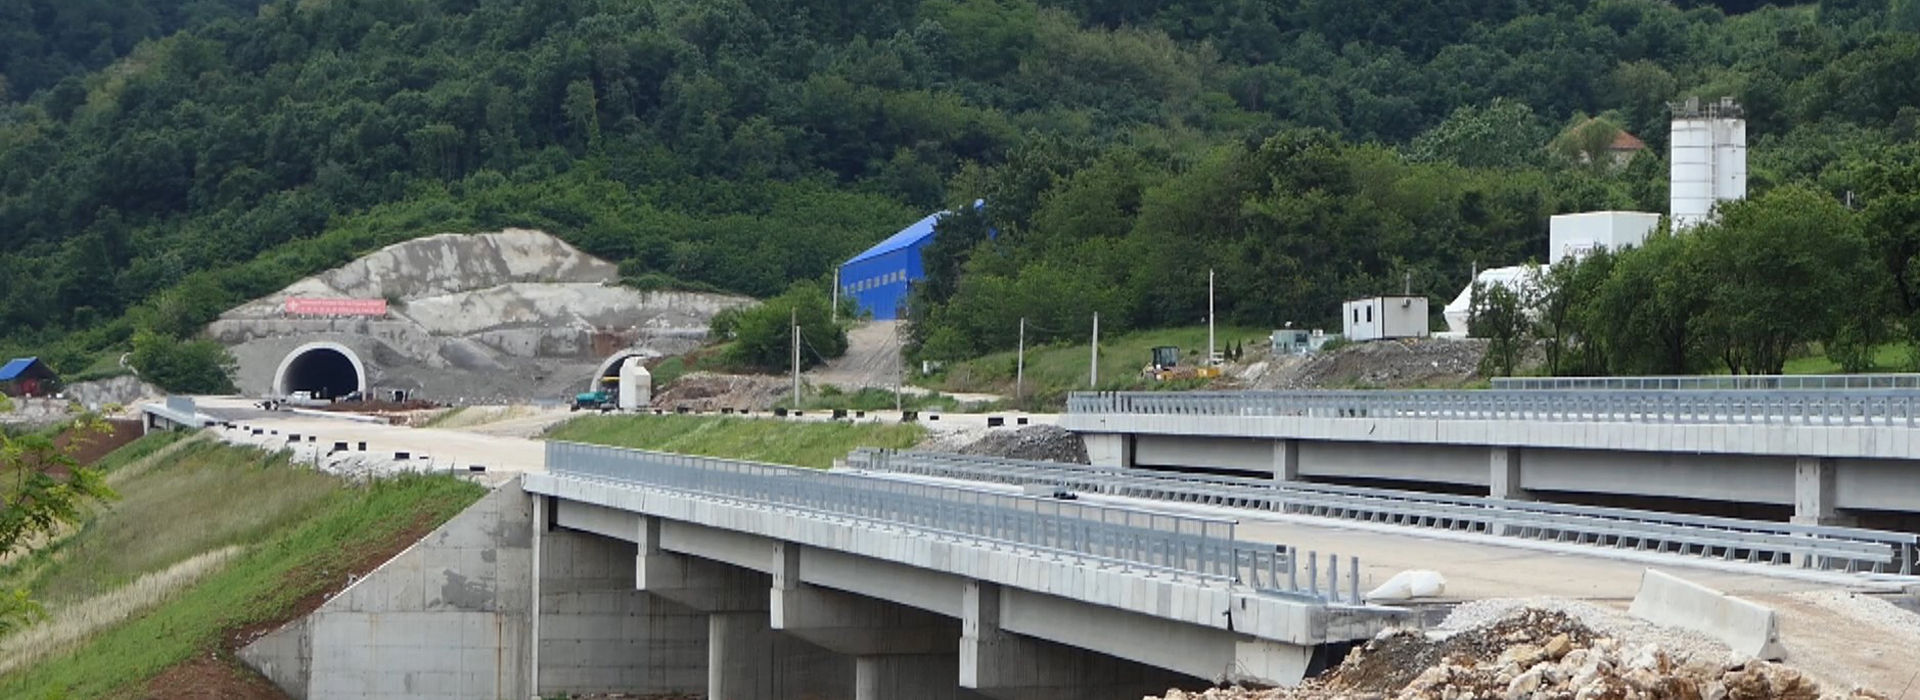 NEW VIDEO OF HIGHWAY E-763 CONSTRUCTION, PAKOVRAĆE – POŽEGA, ON ROADS OF SERBIA YOUTUBE CHANNEL